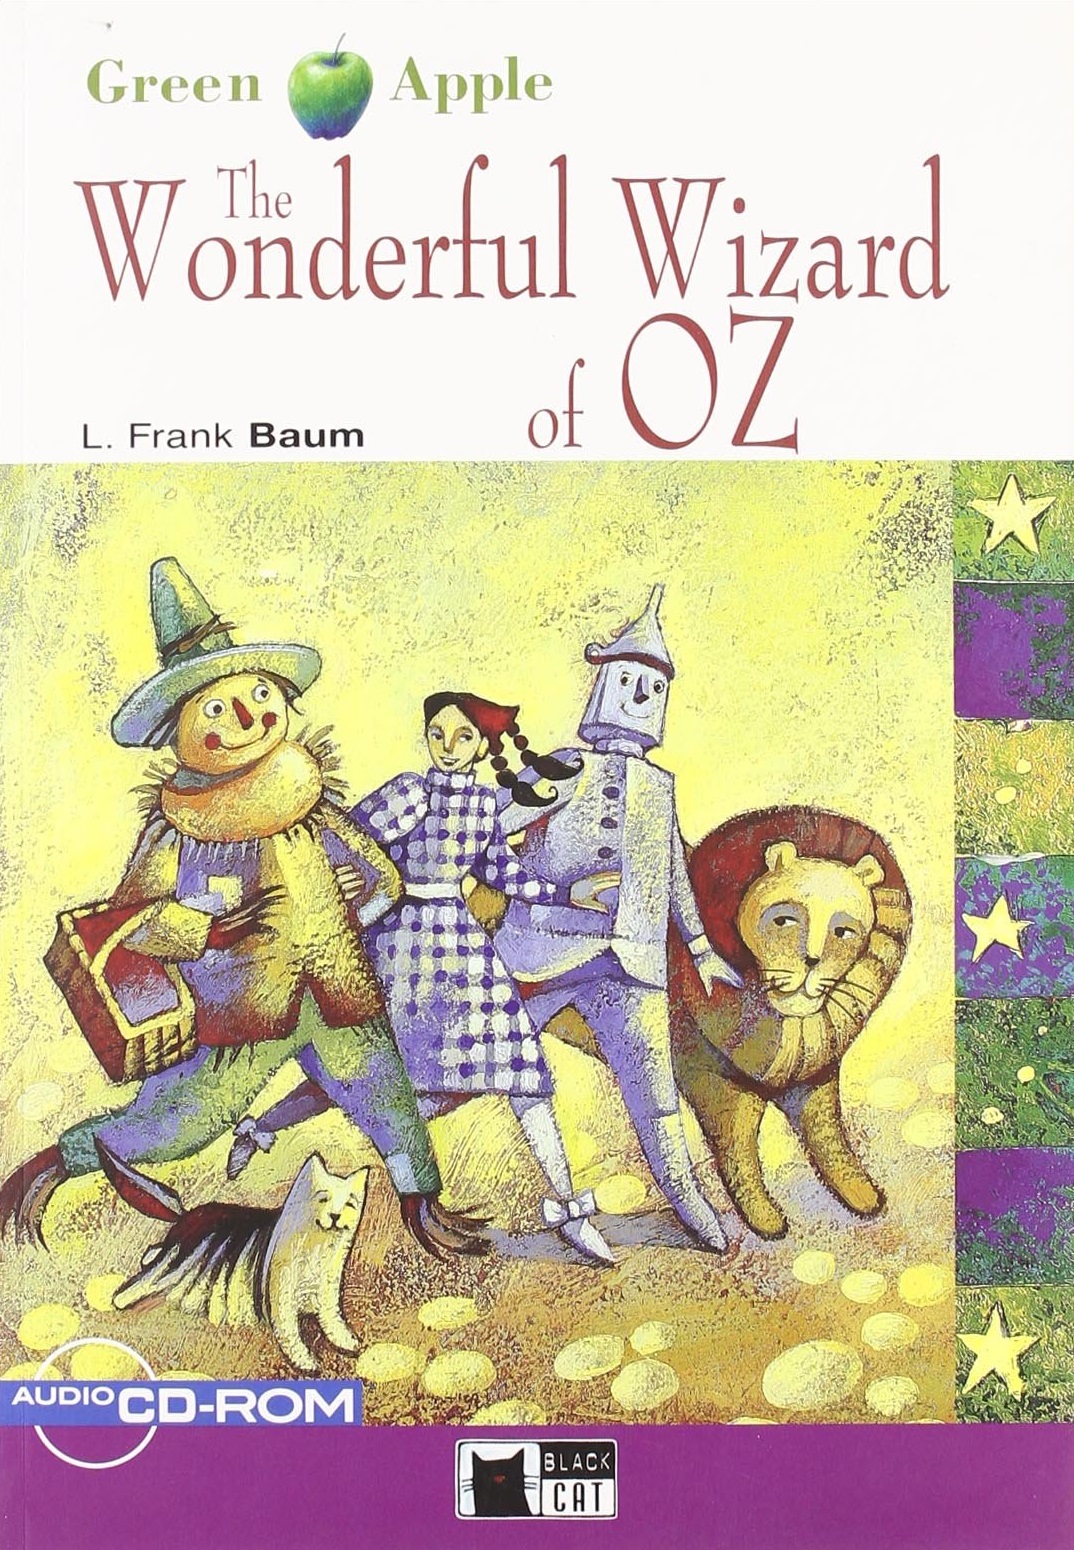 The Wonderful Wizard of Oz + Audio CD-ROM